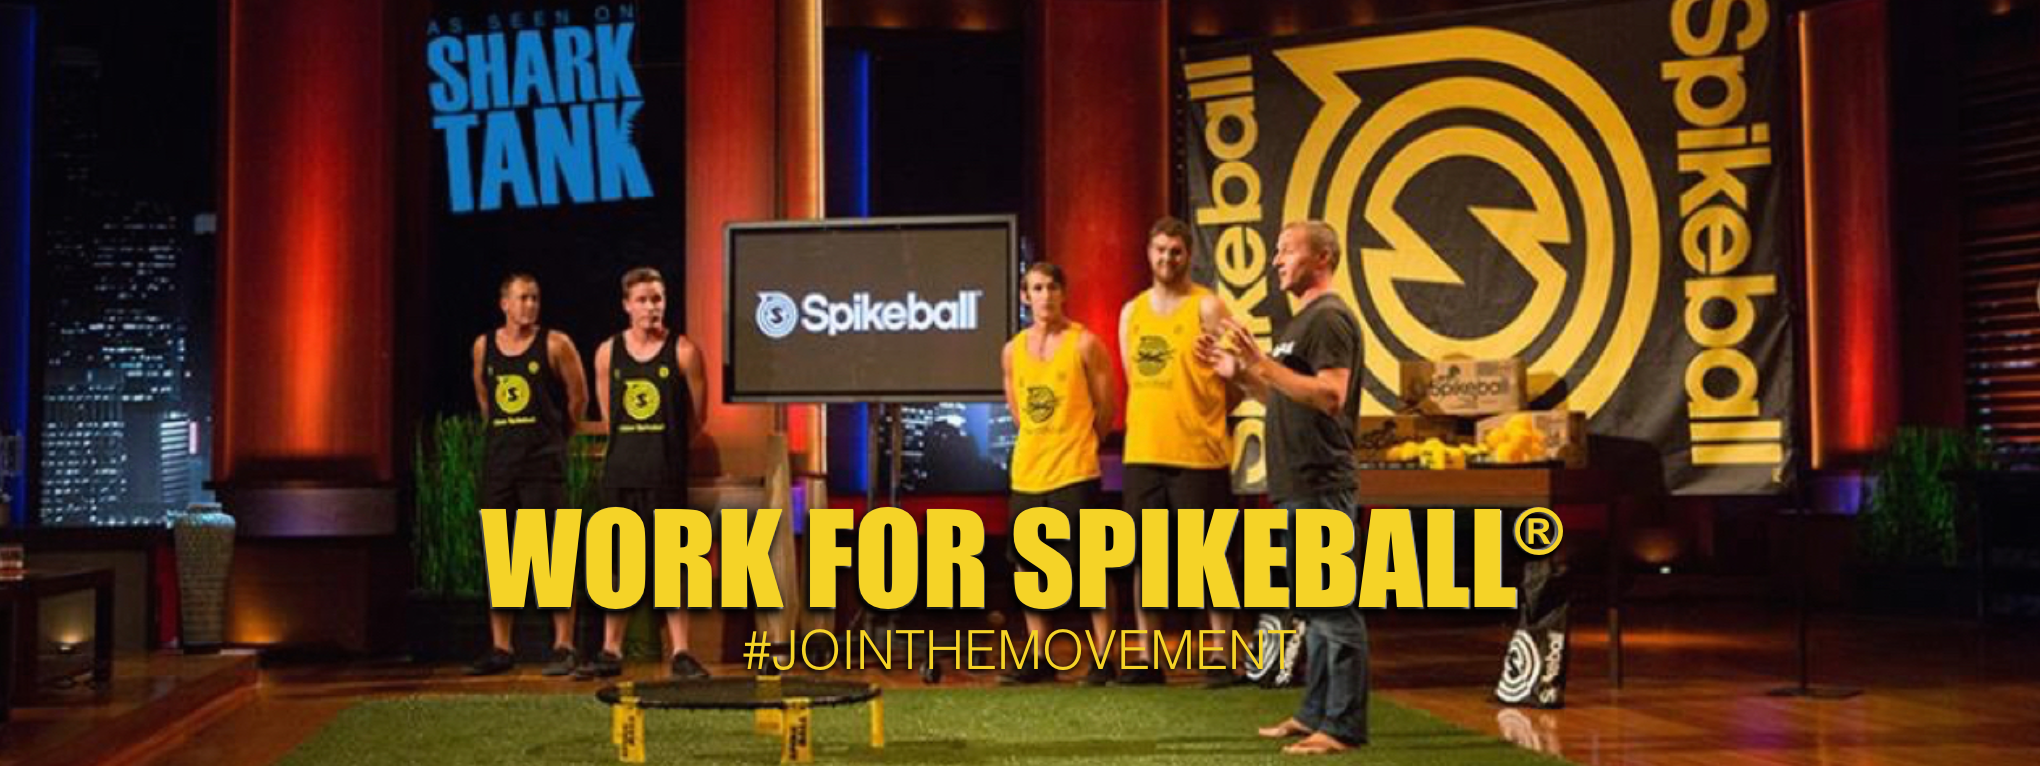 Spikeball Inc.